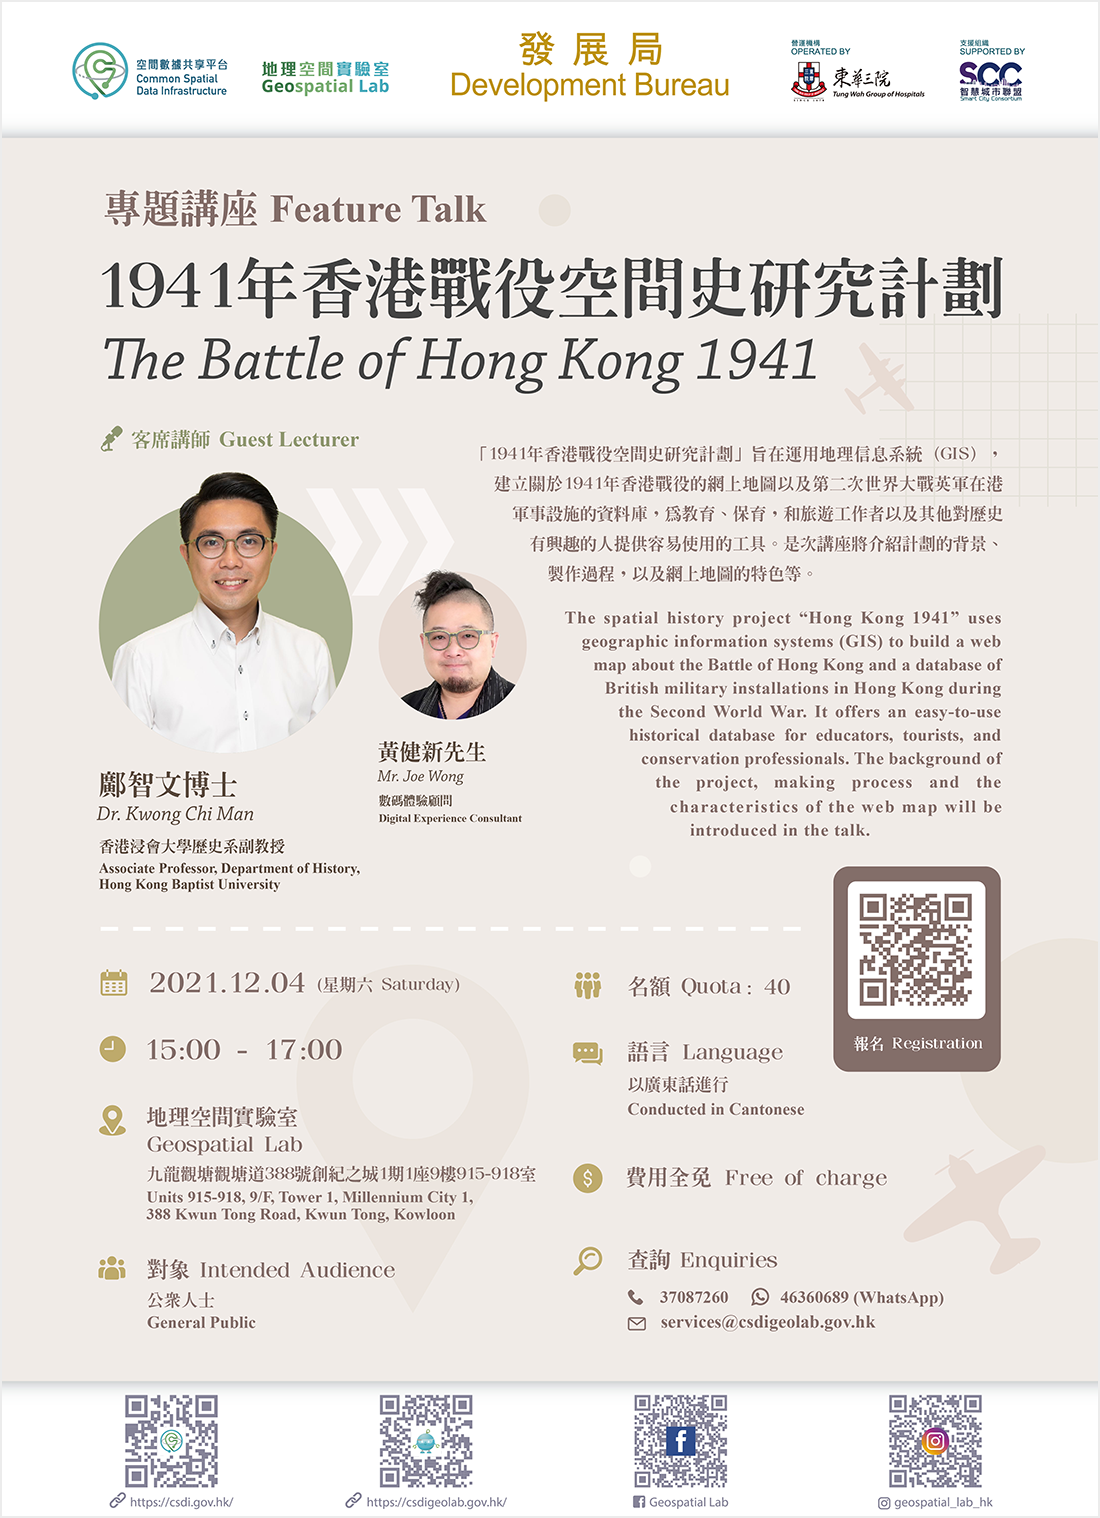 Poster of Feature Talk - The Battle of Hong Kong 1941